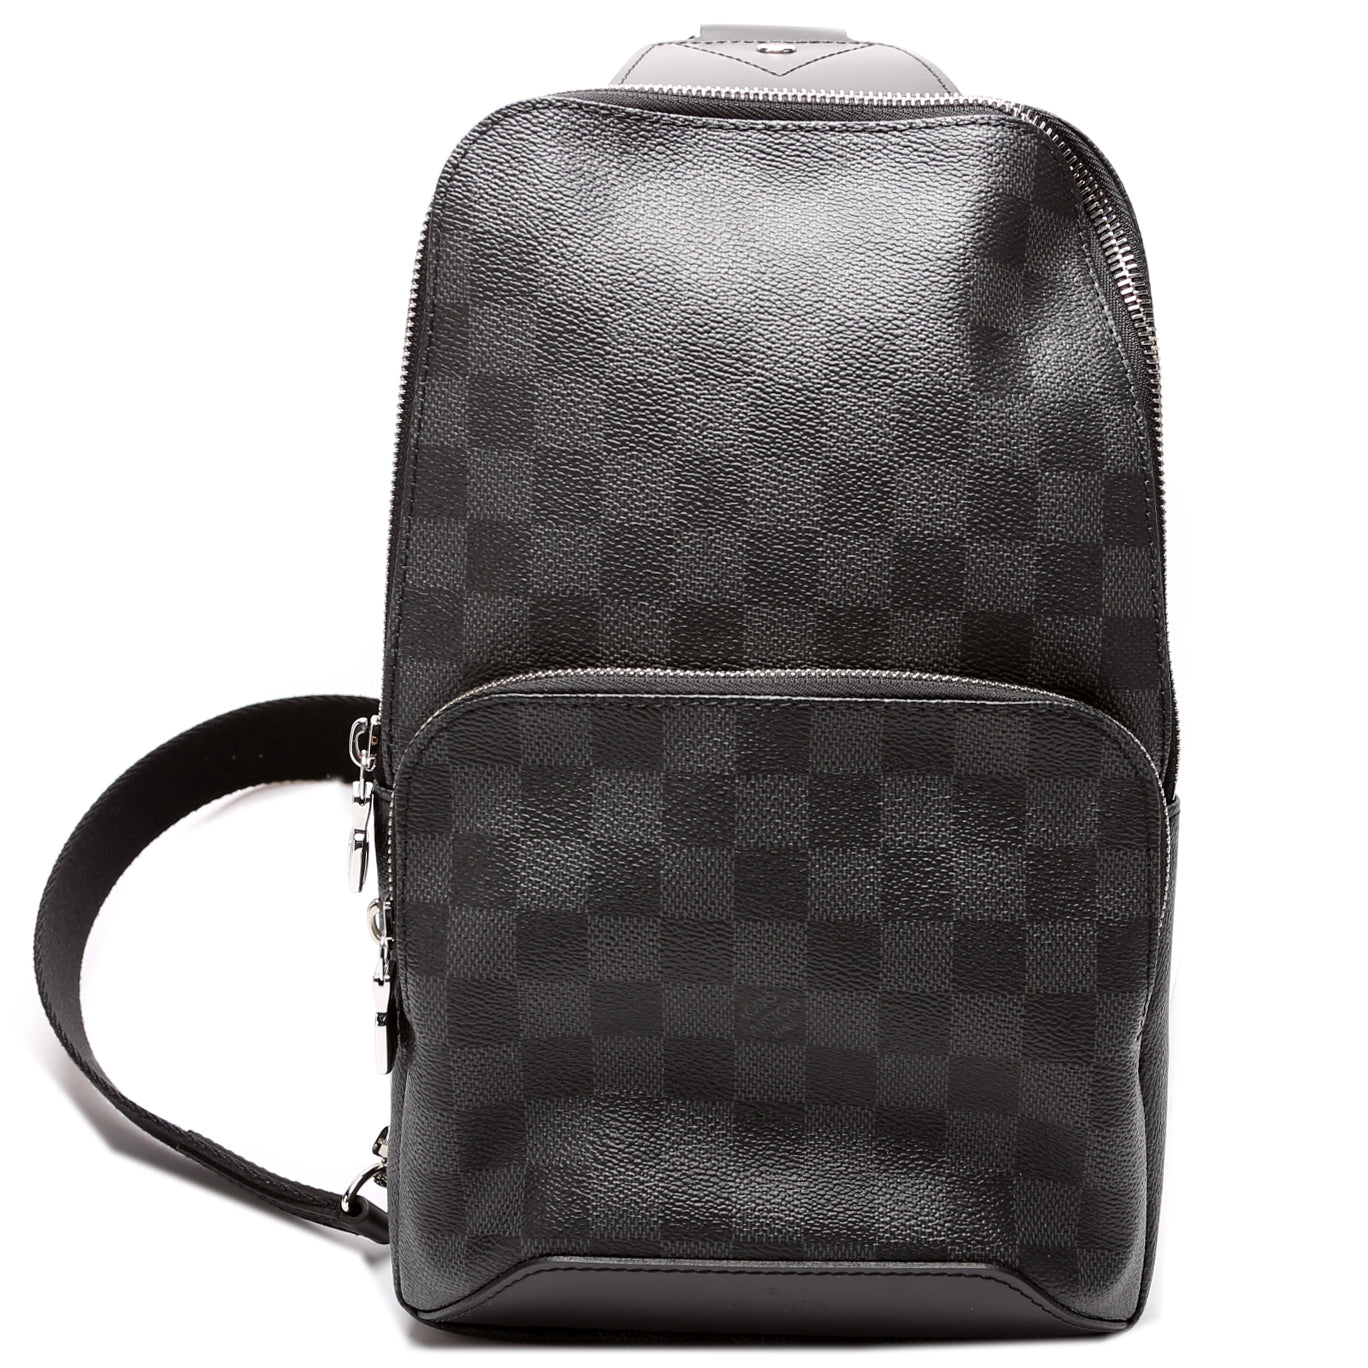 Preowned Louis Vuitton Avenue Sling Bag Damier Graphite Cross Body AUTHENTIC  LV